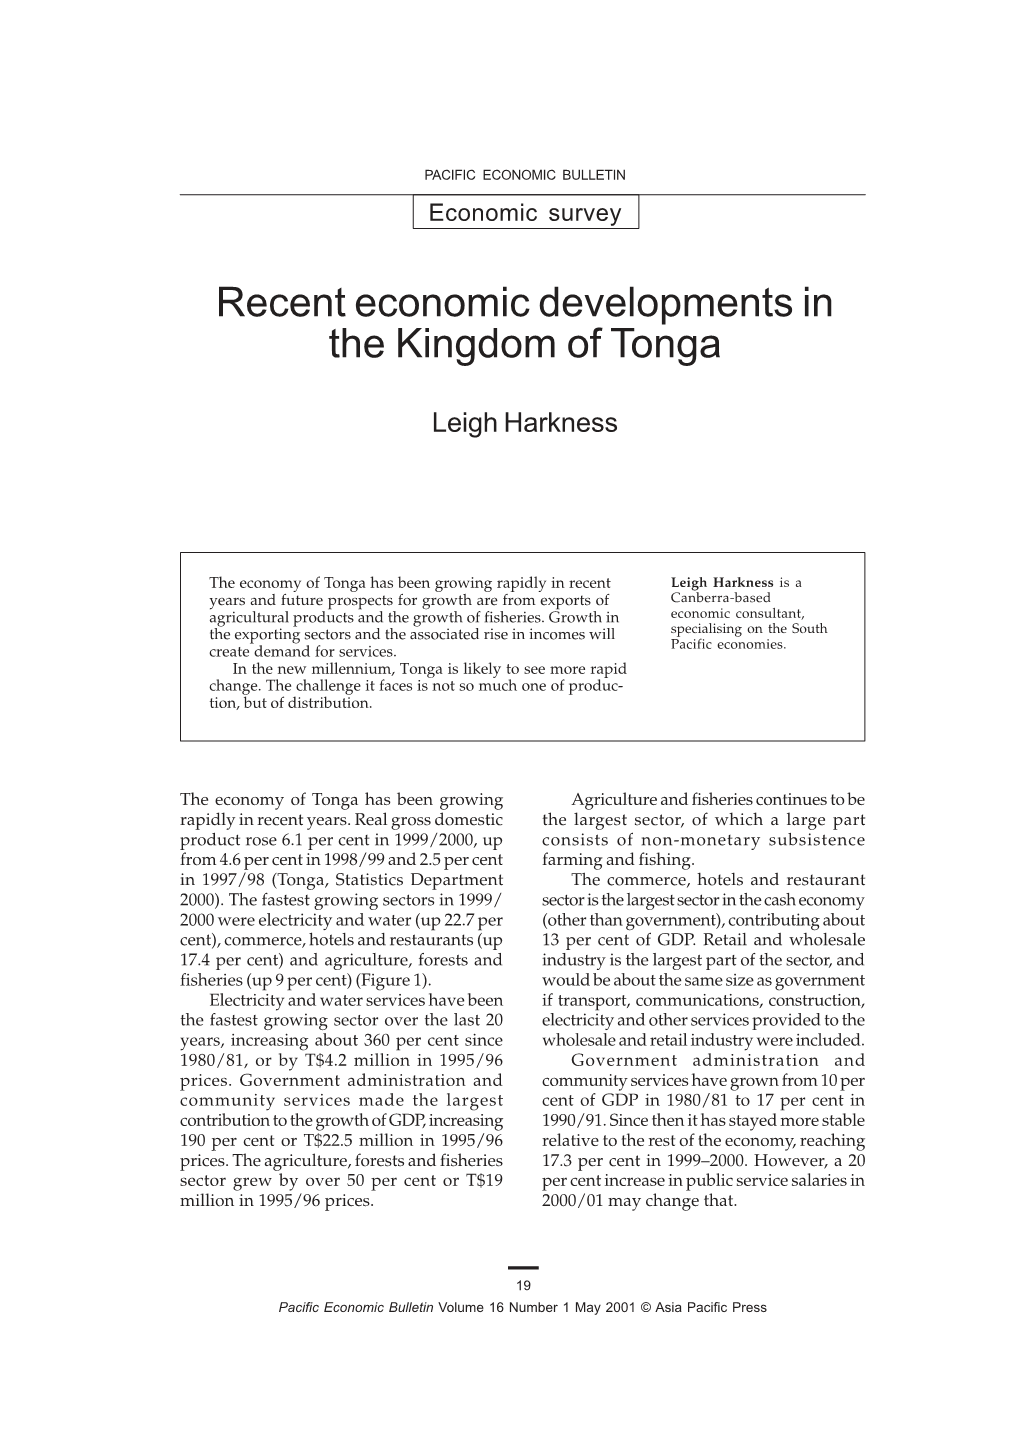 Recent Economic Developments in the Kingdom of Tonga